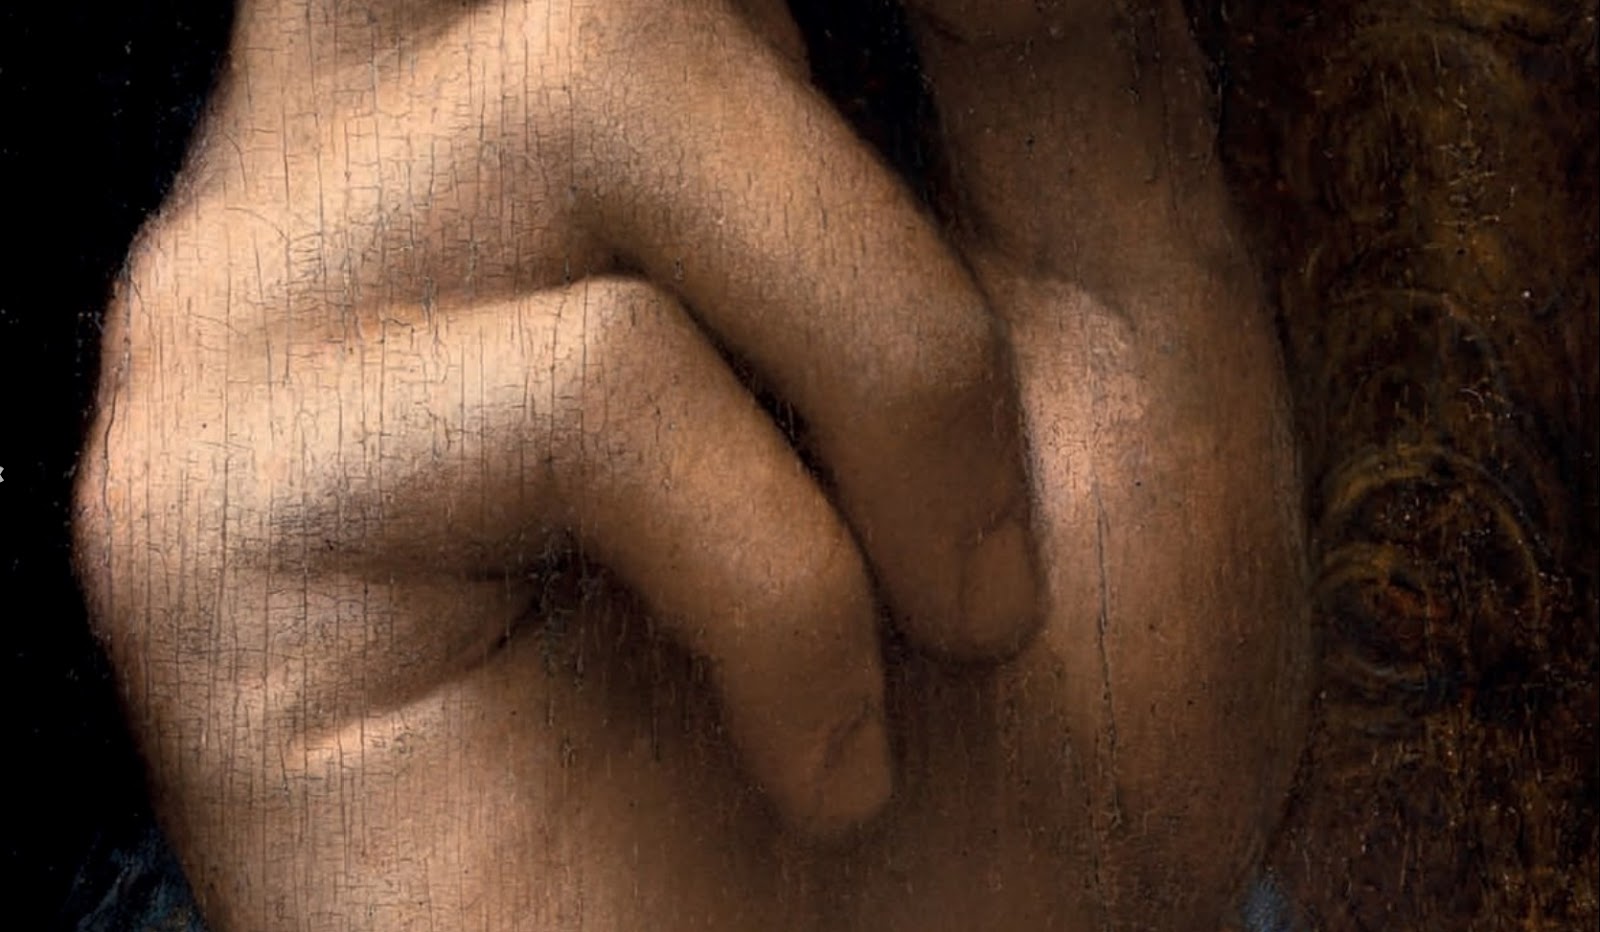 Leonardo+da+Vinci-1452-1519 (862).jpg